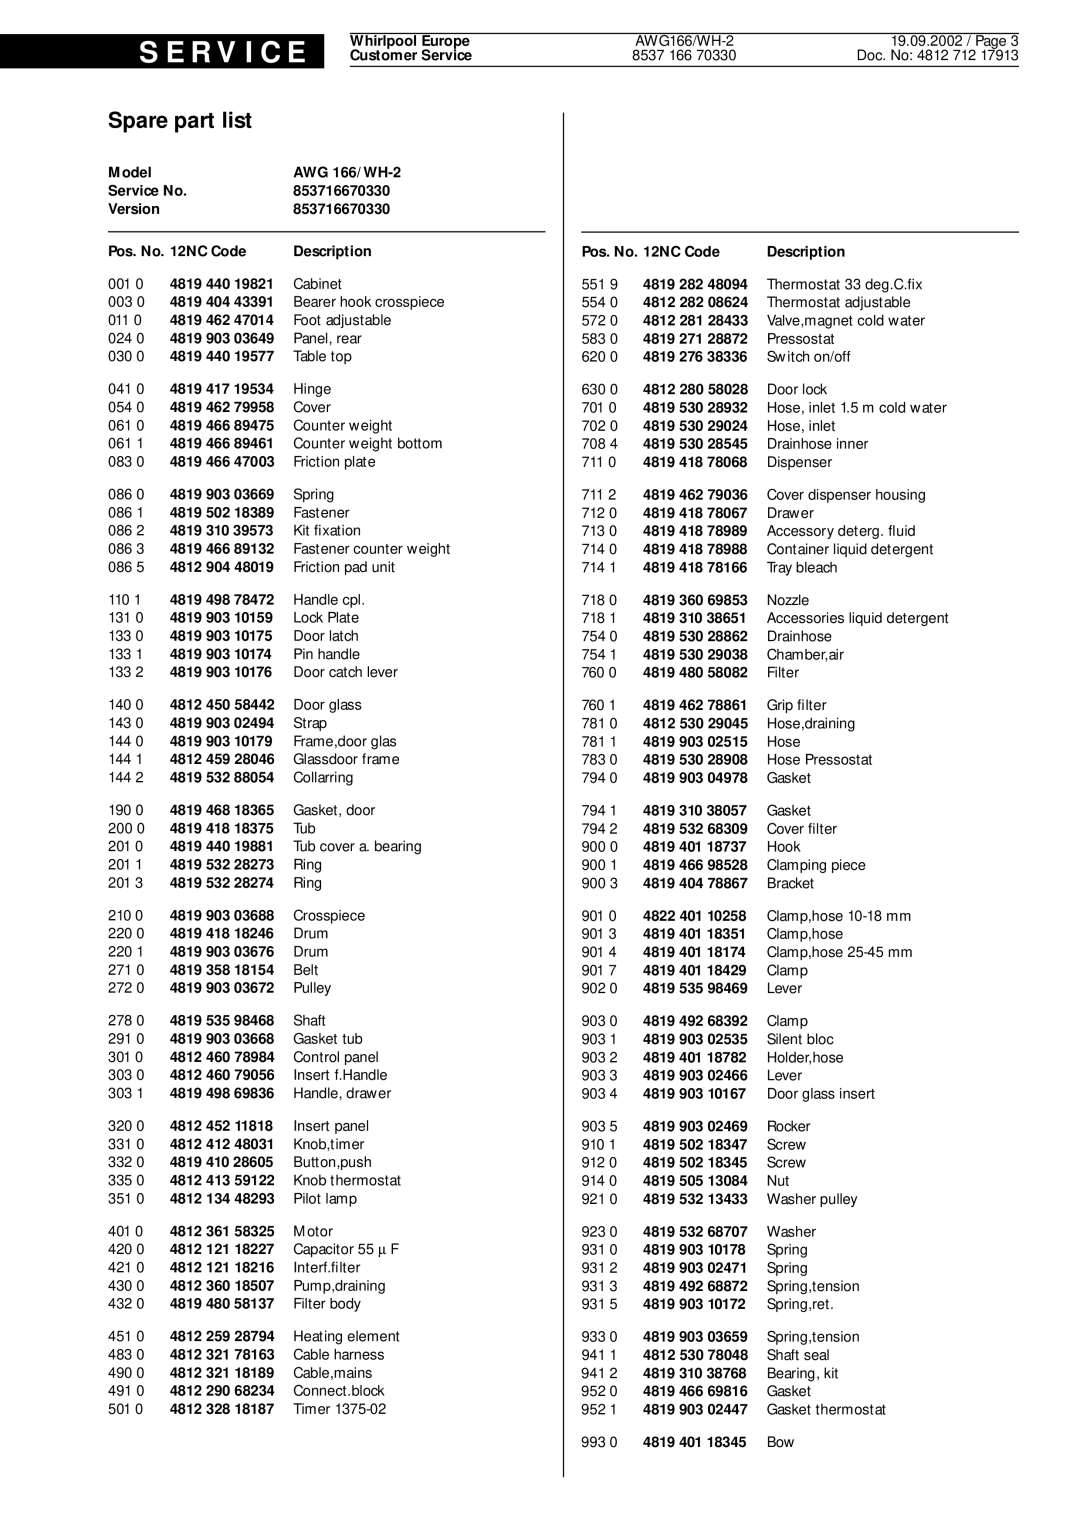 Whirlpool AWG166 WH-2 service manual Spare part list, S E R V I C E, Version 